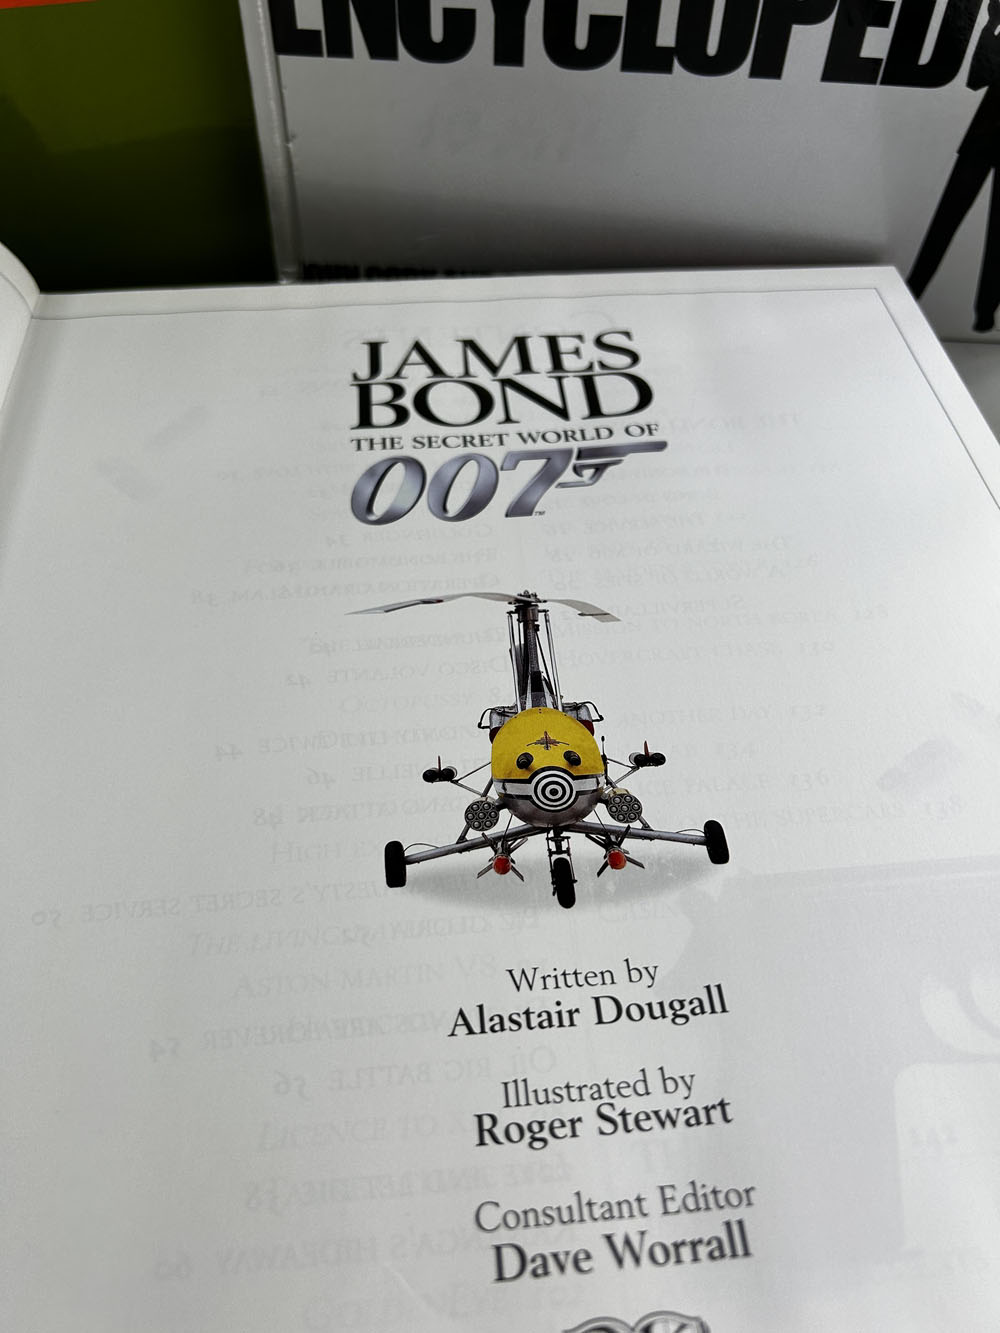 James Bond 007 Collection Hardback Books Collection - Image 3 of 11